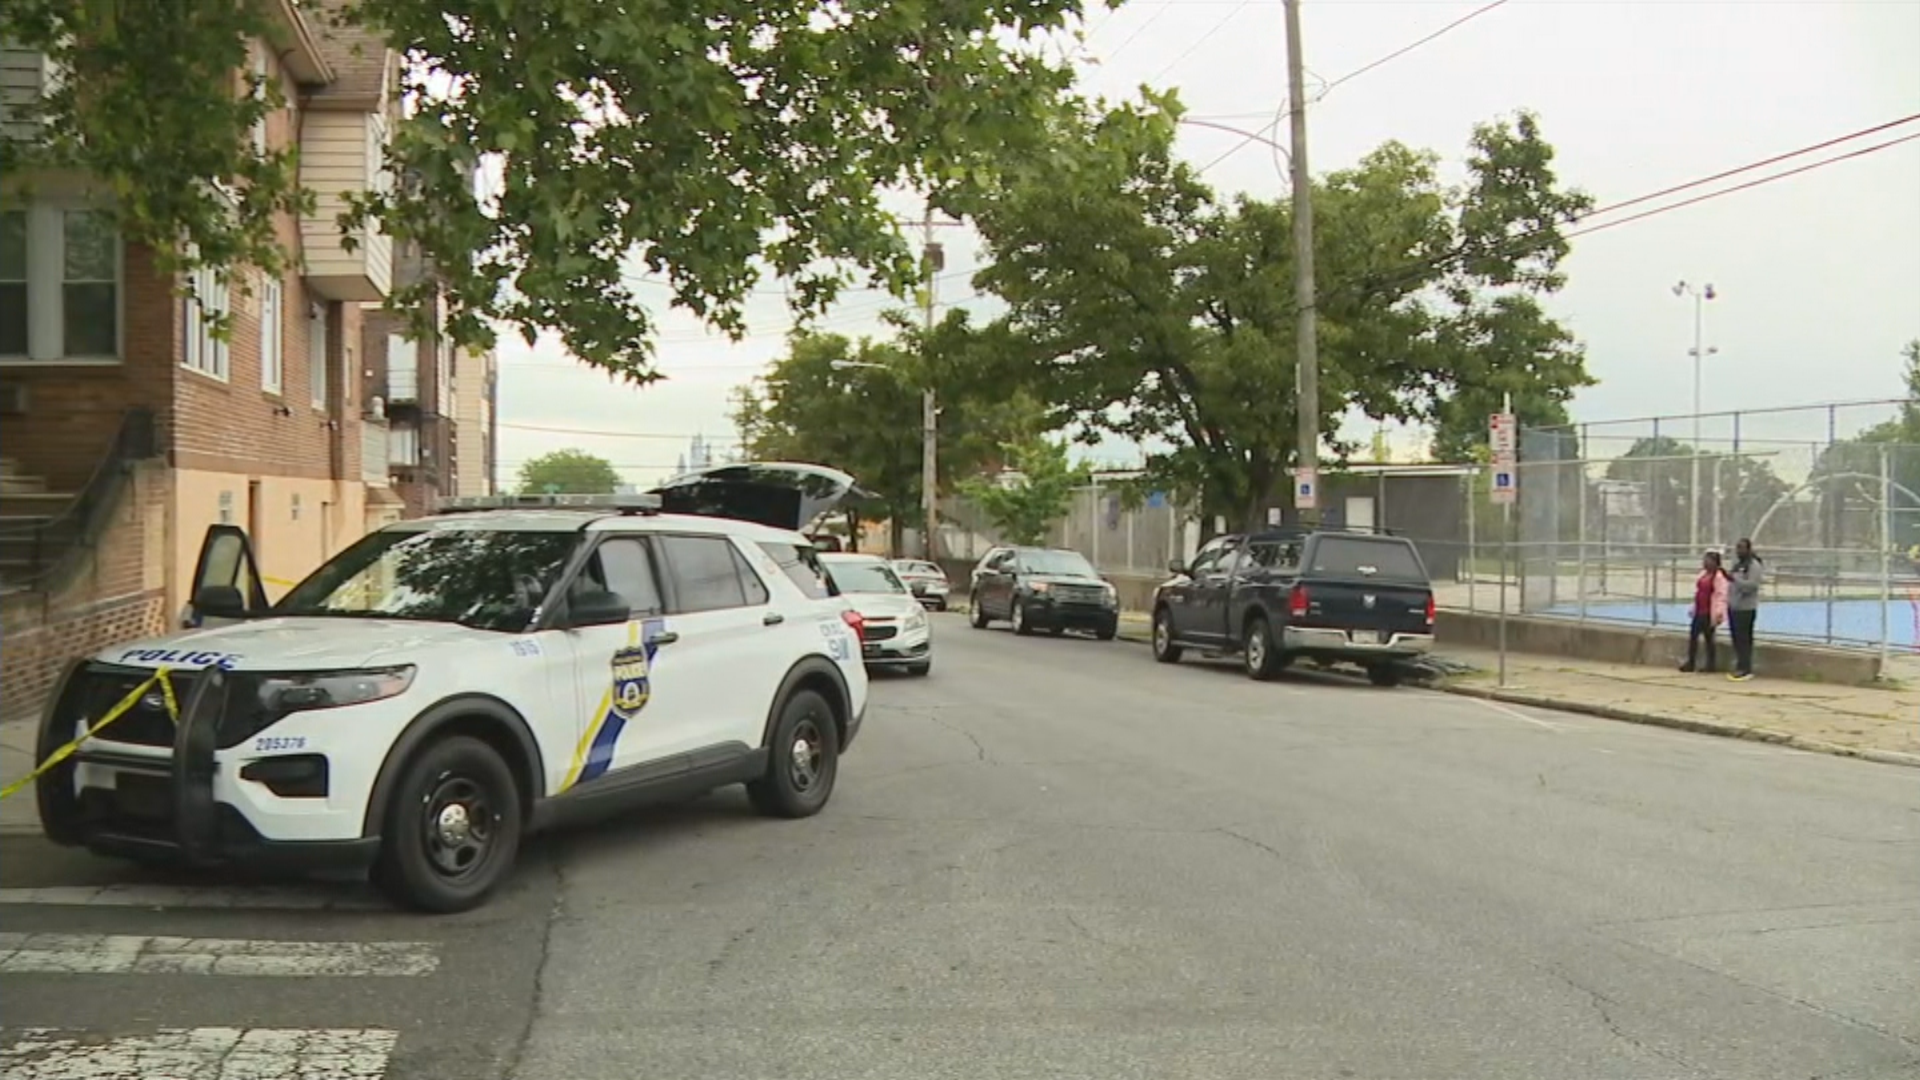 5 Separate Shootings In Philadelphia Leaves 1 Person Dead, 5 Others Injured: Police